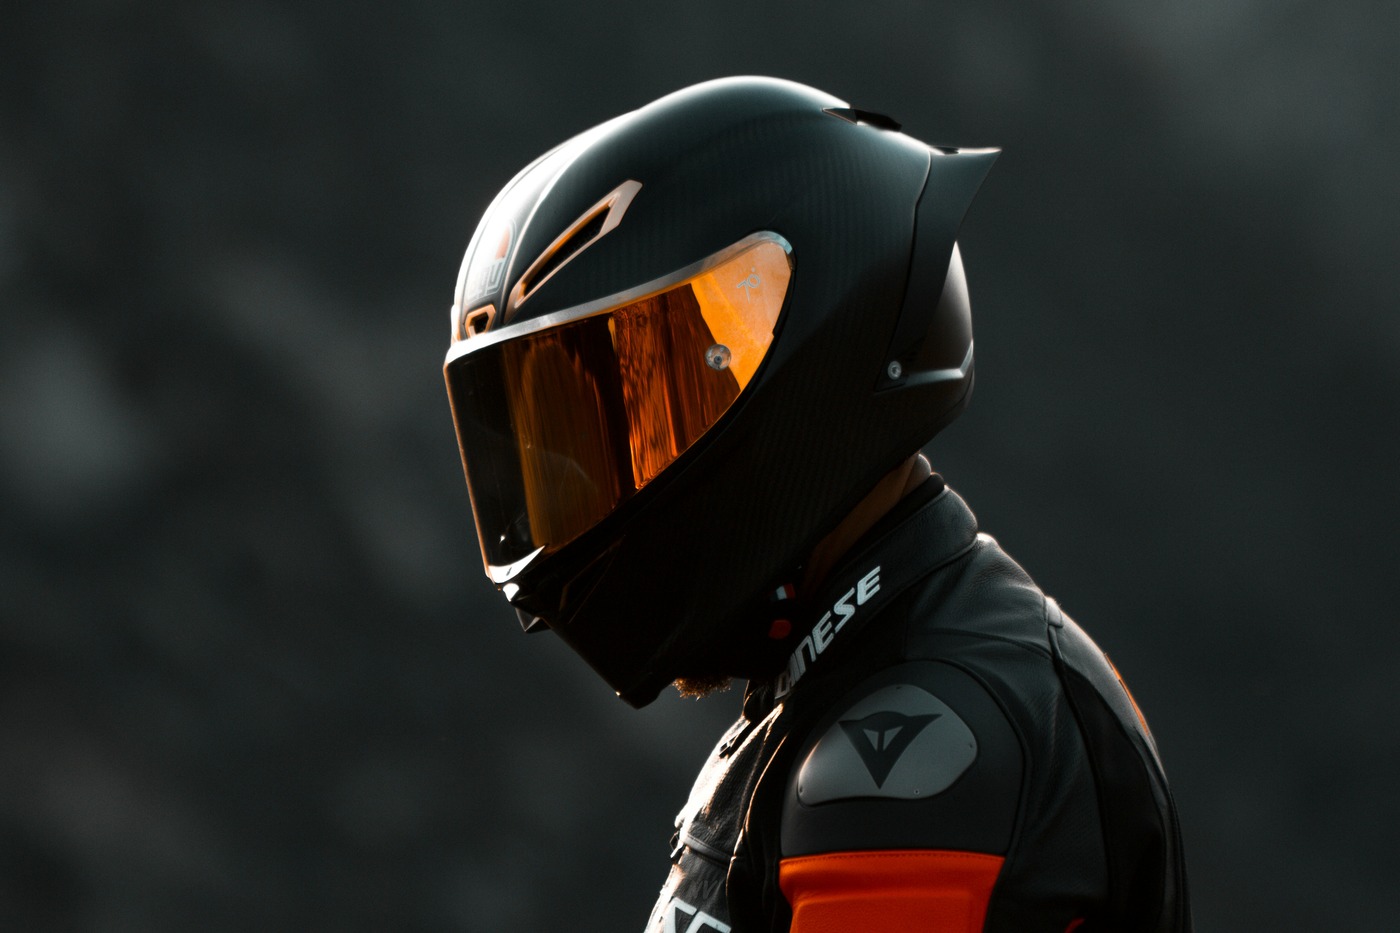 Carbon fiber motorcycle helmet